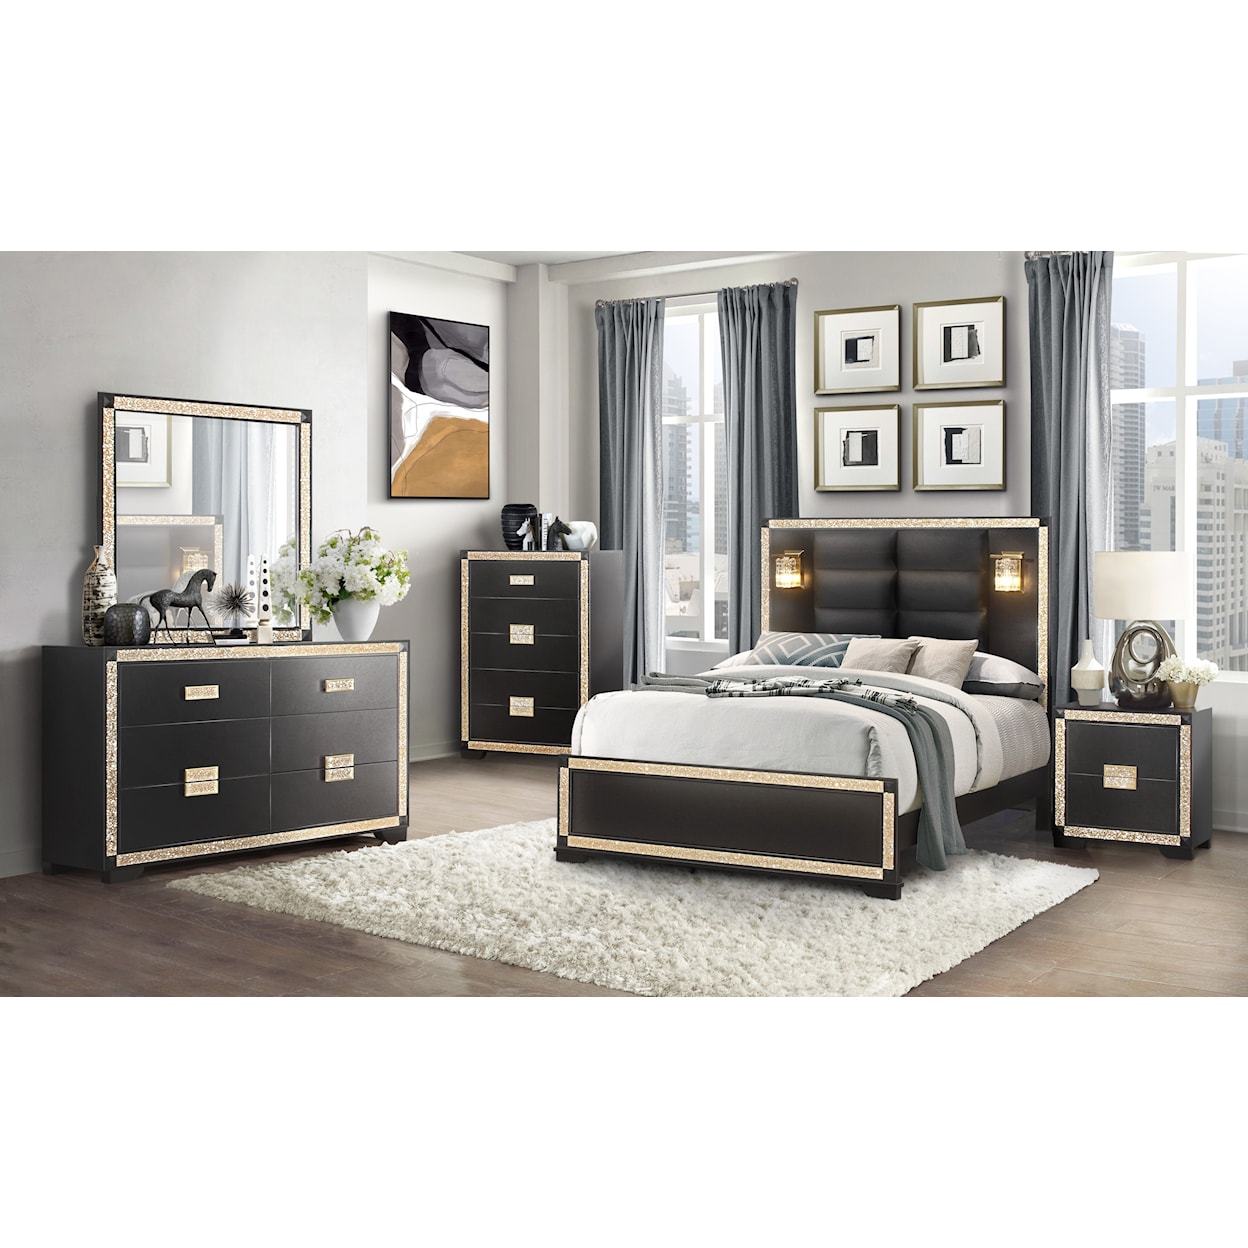 Global Furniture Rivera Dresser Mirror with Gold and Black Trim